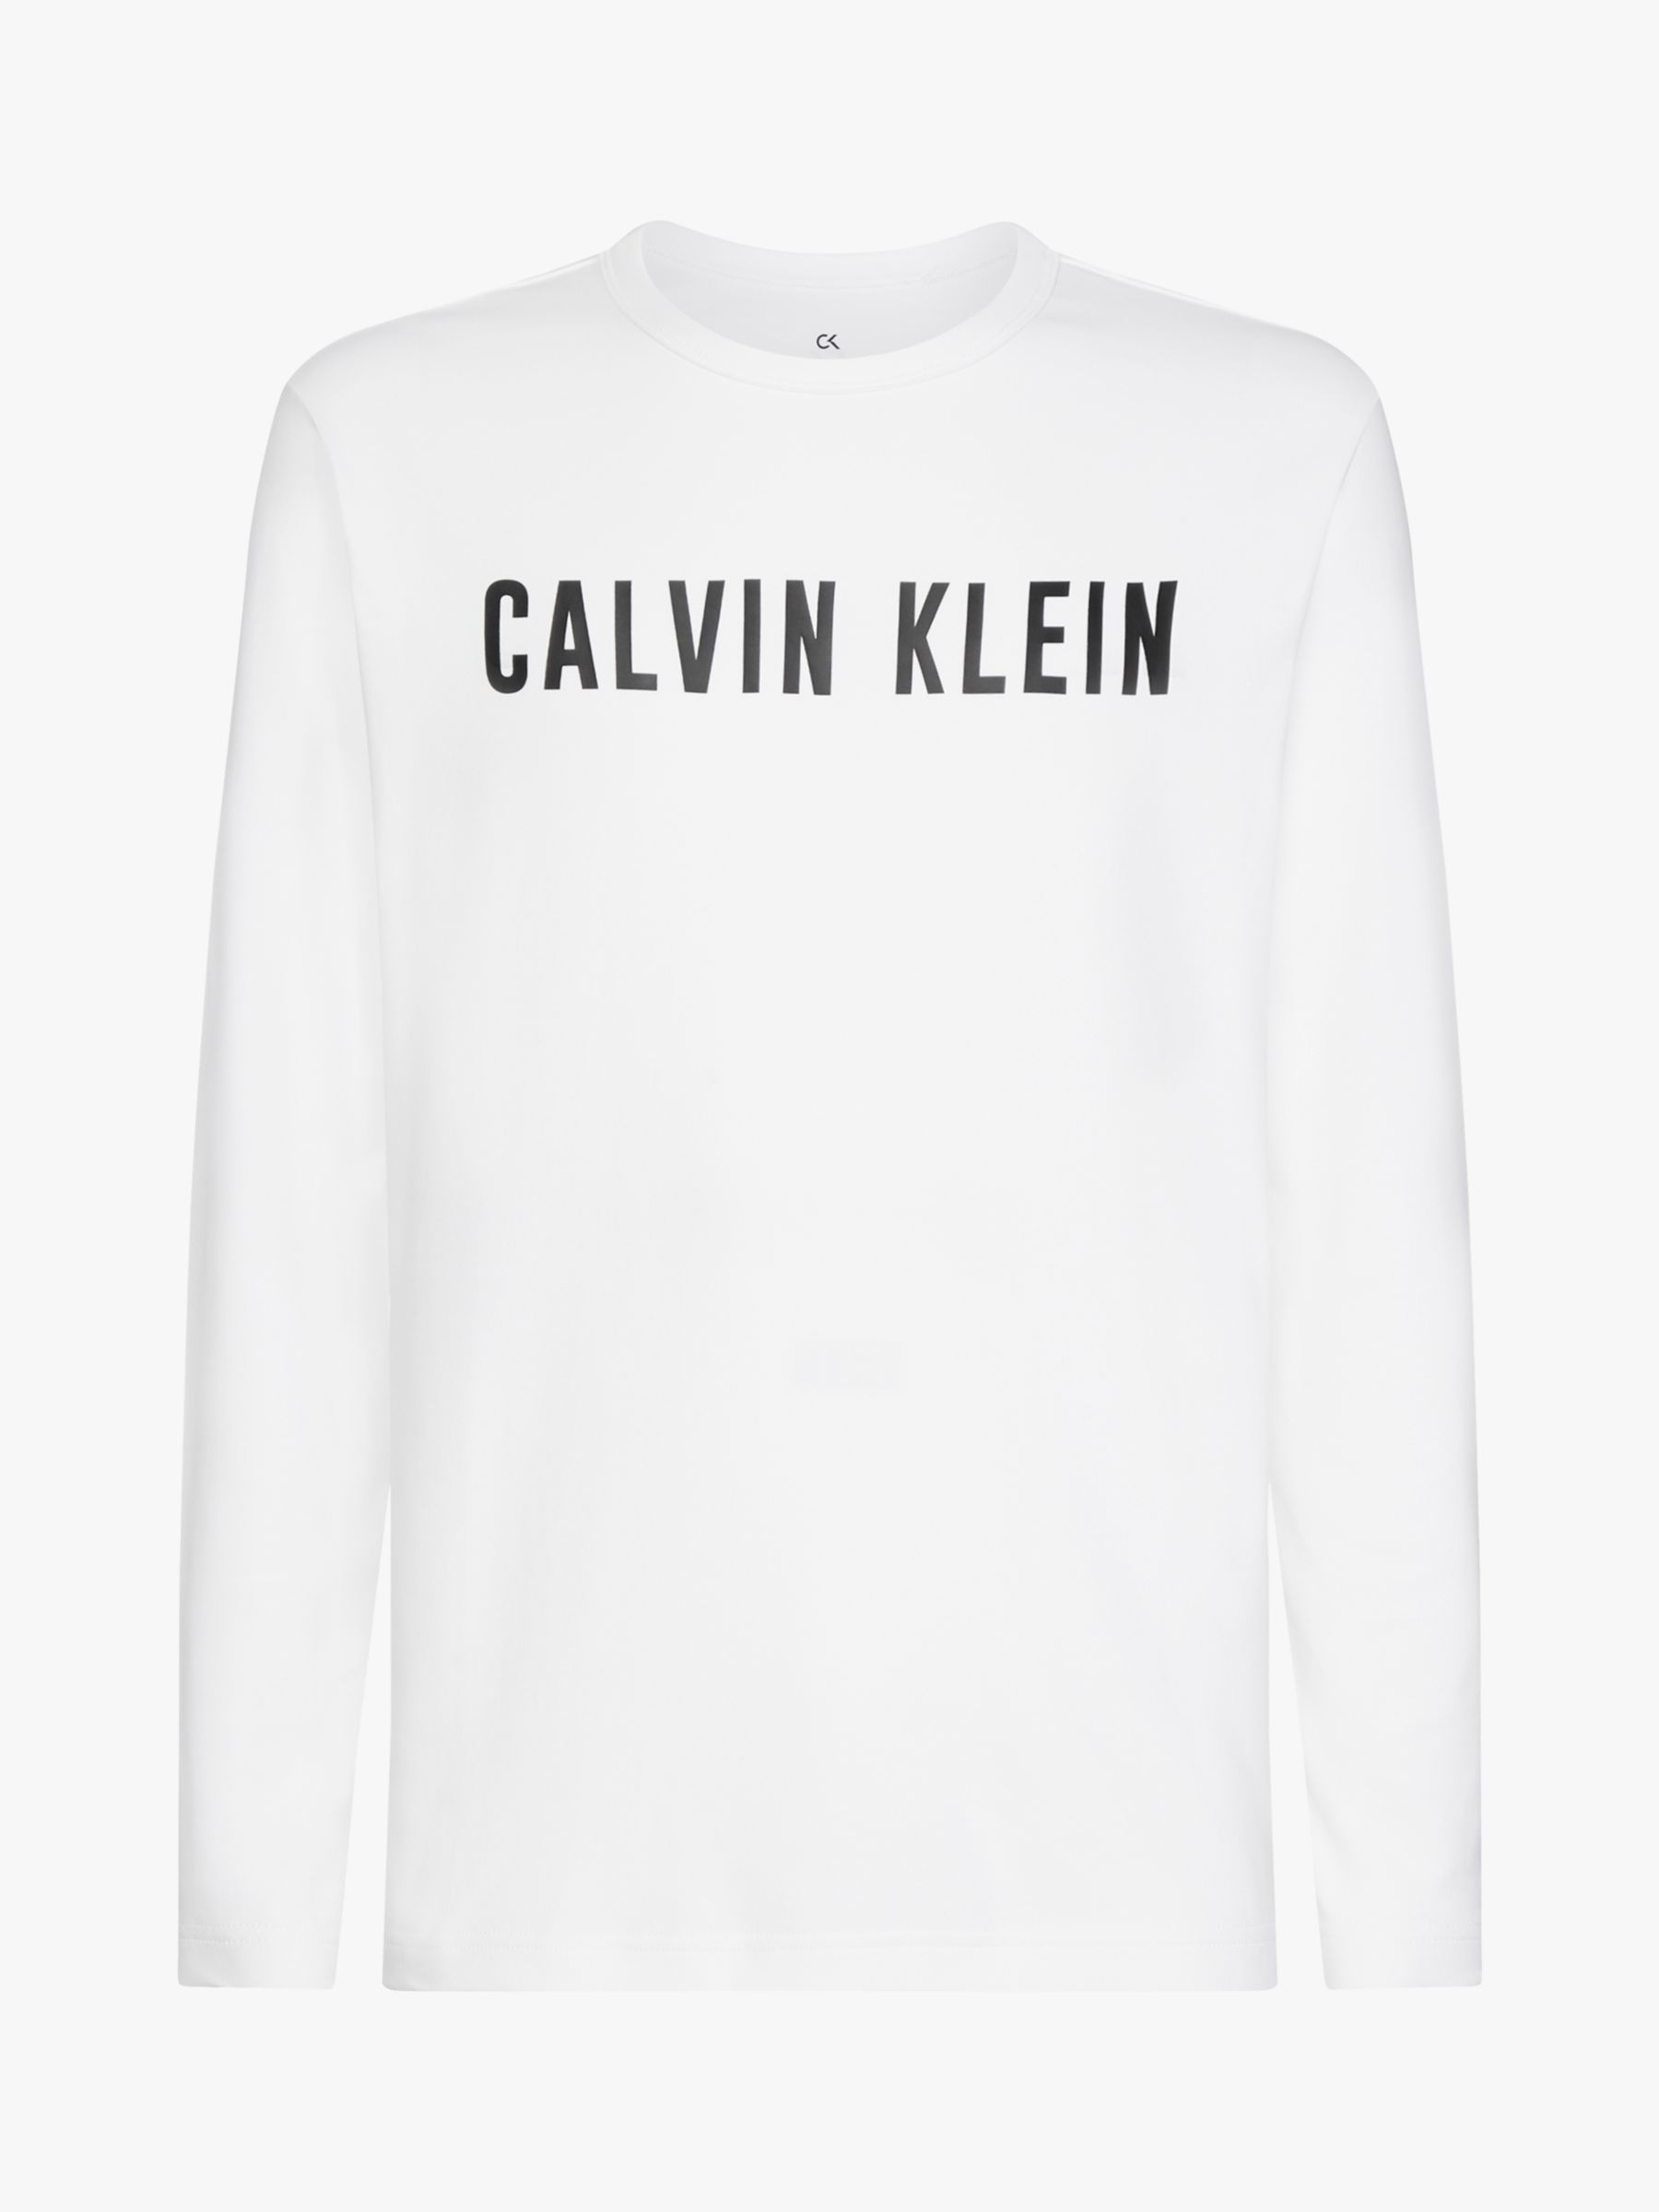 calvin klein white long sleeve t shirt